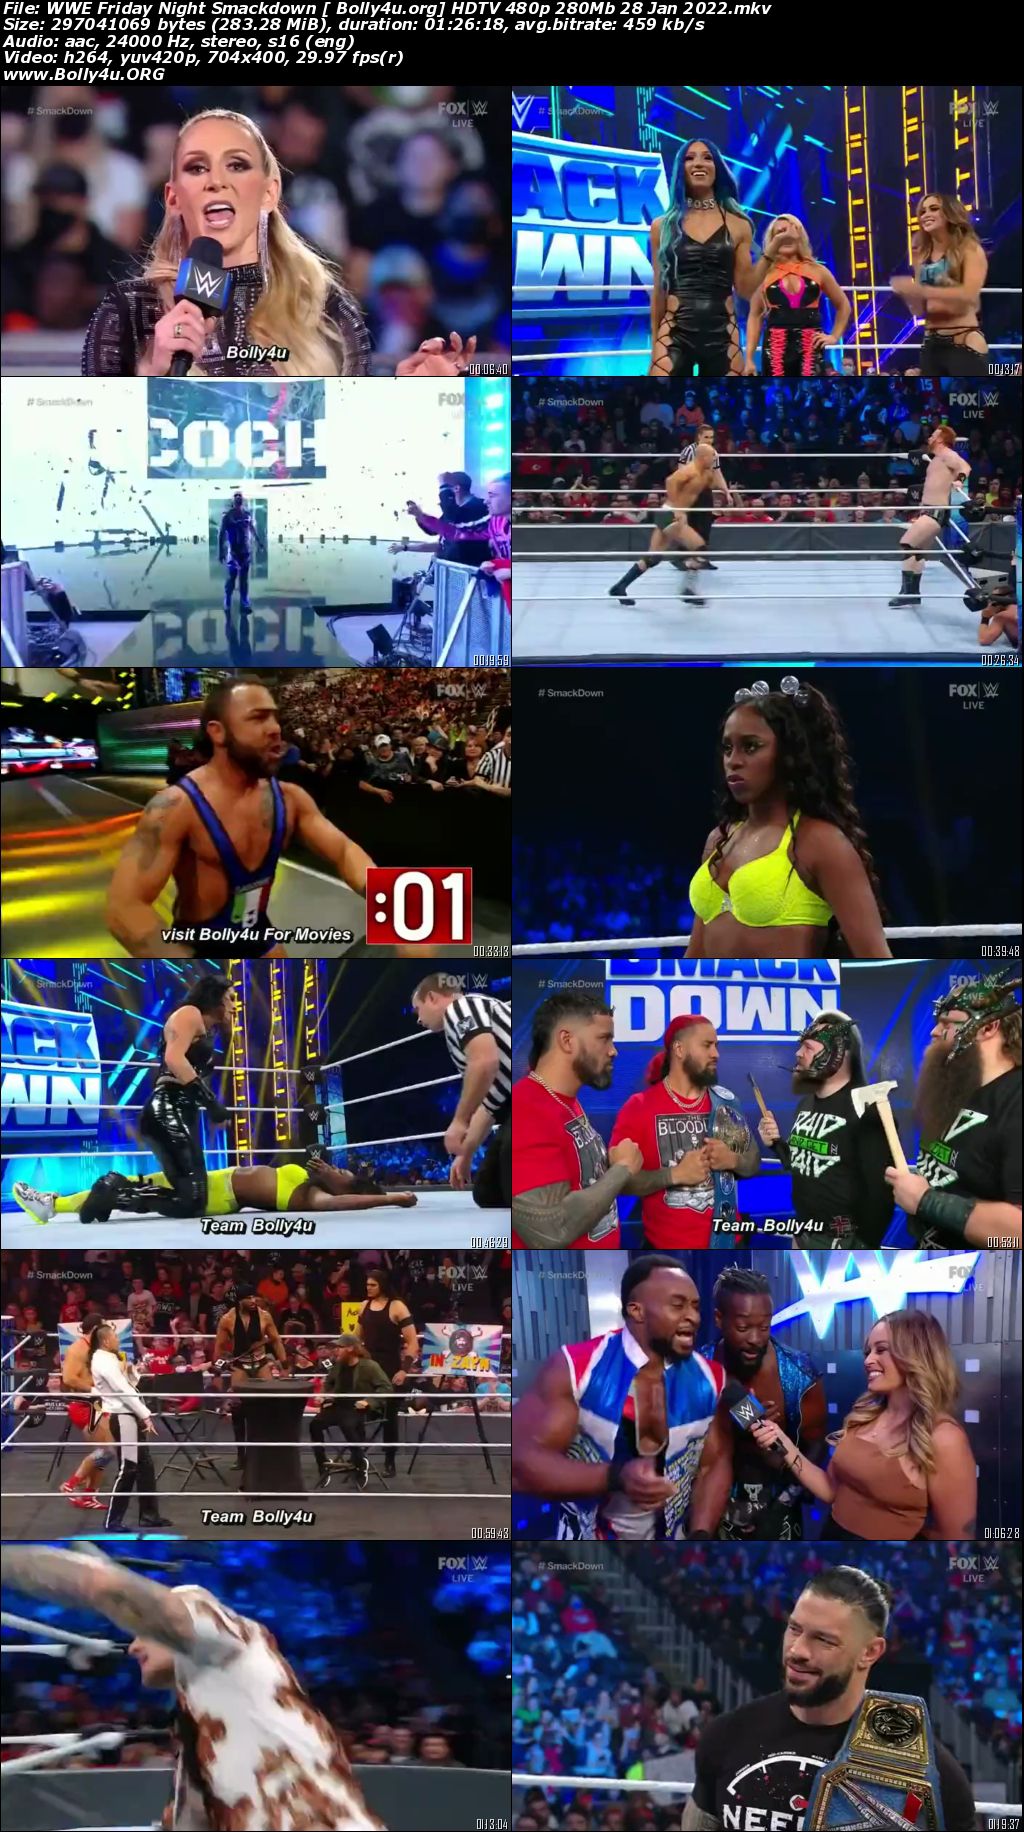 WWE Friday Night Smackdown HDTV 480p 280Mb 28 Jan 2022 Download